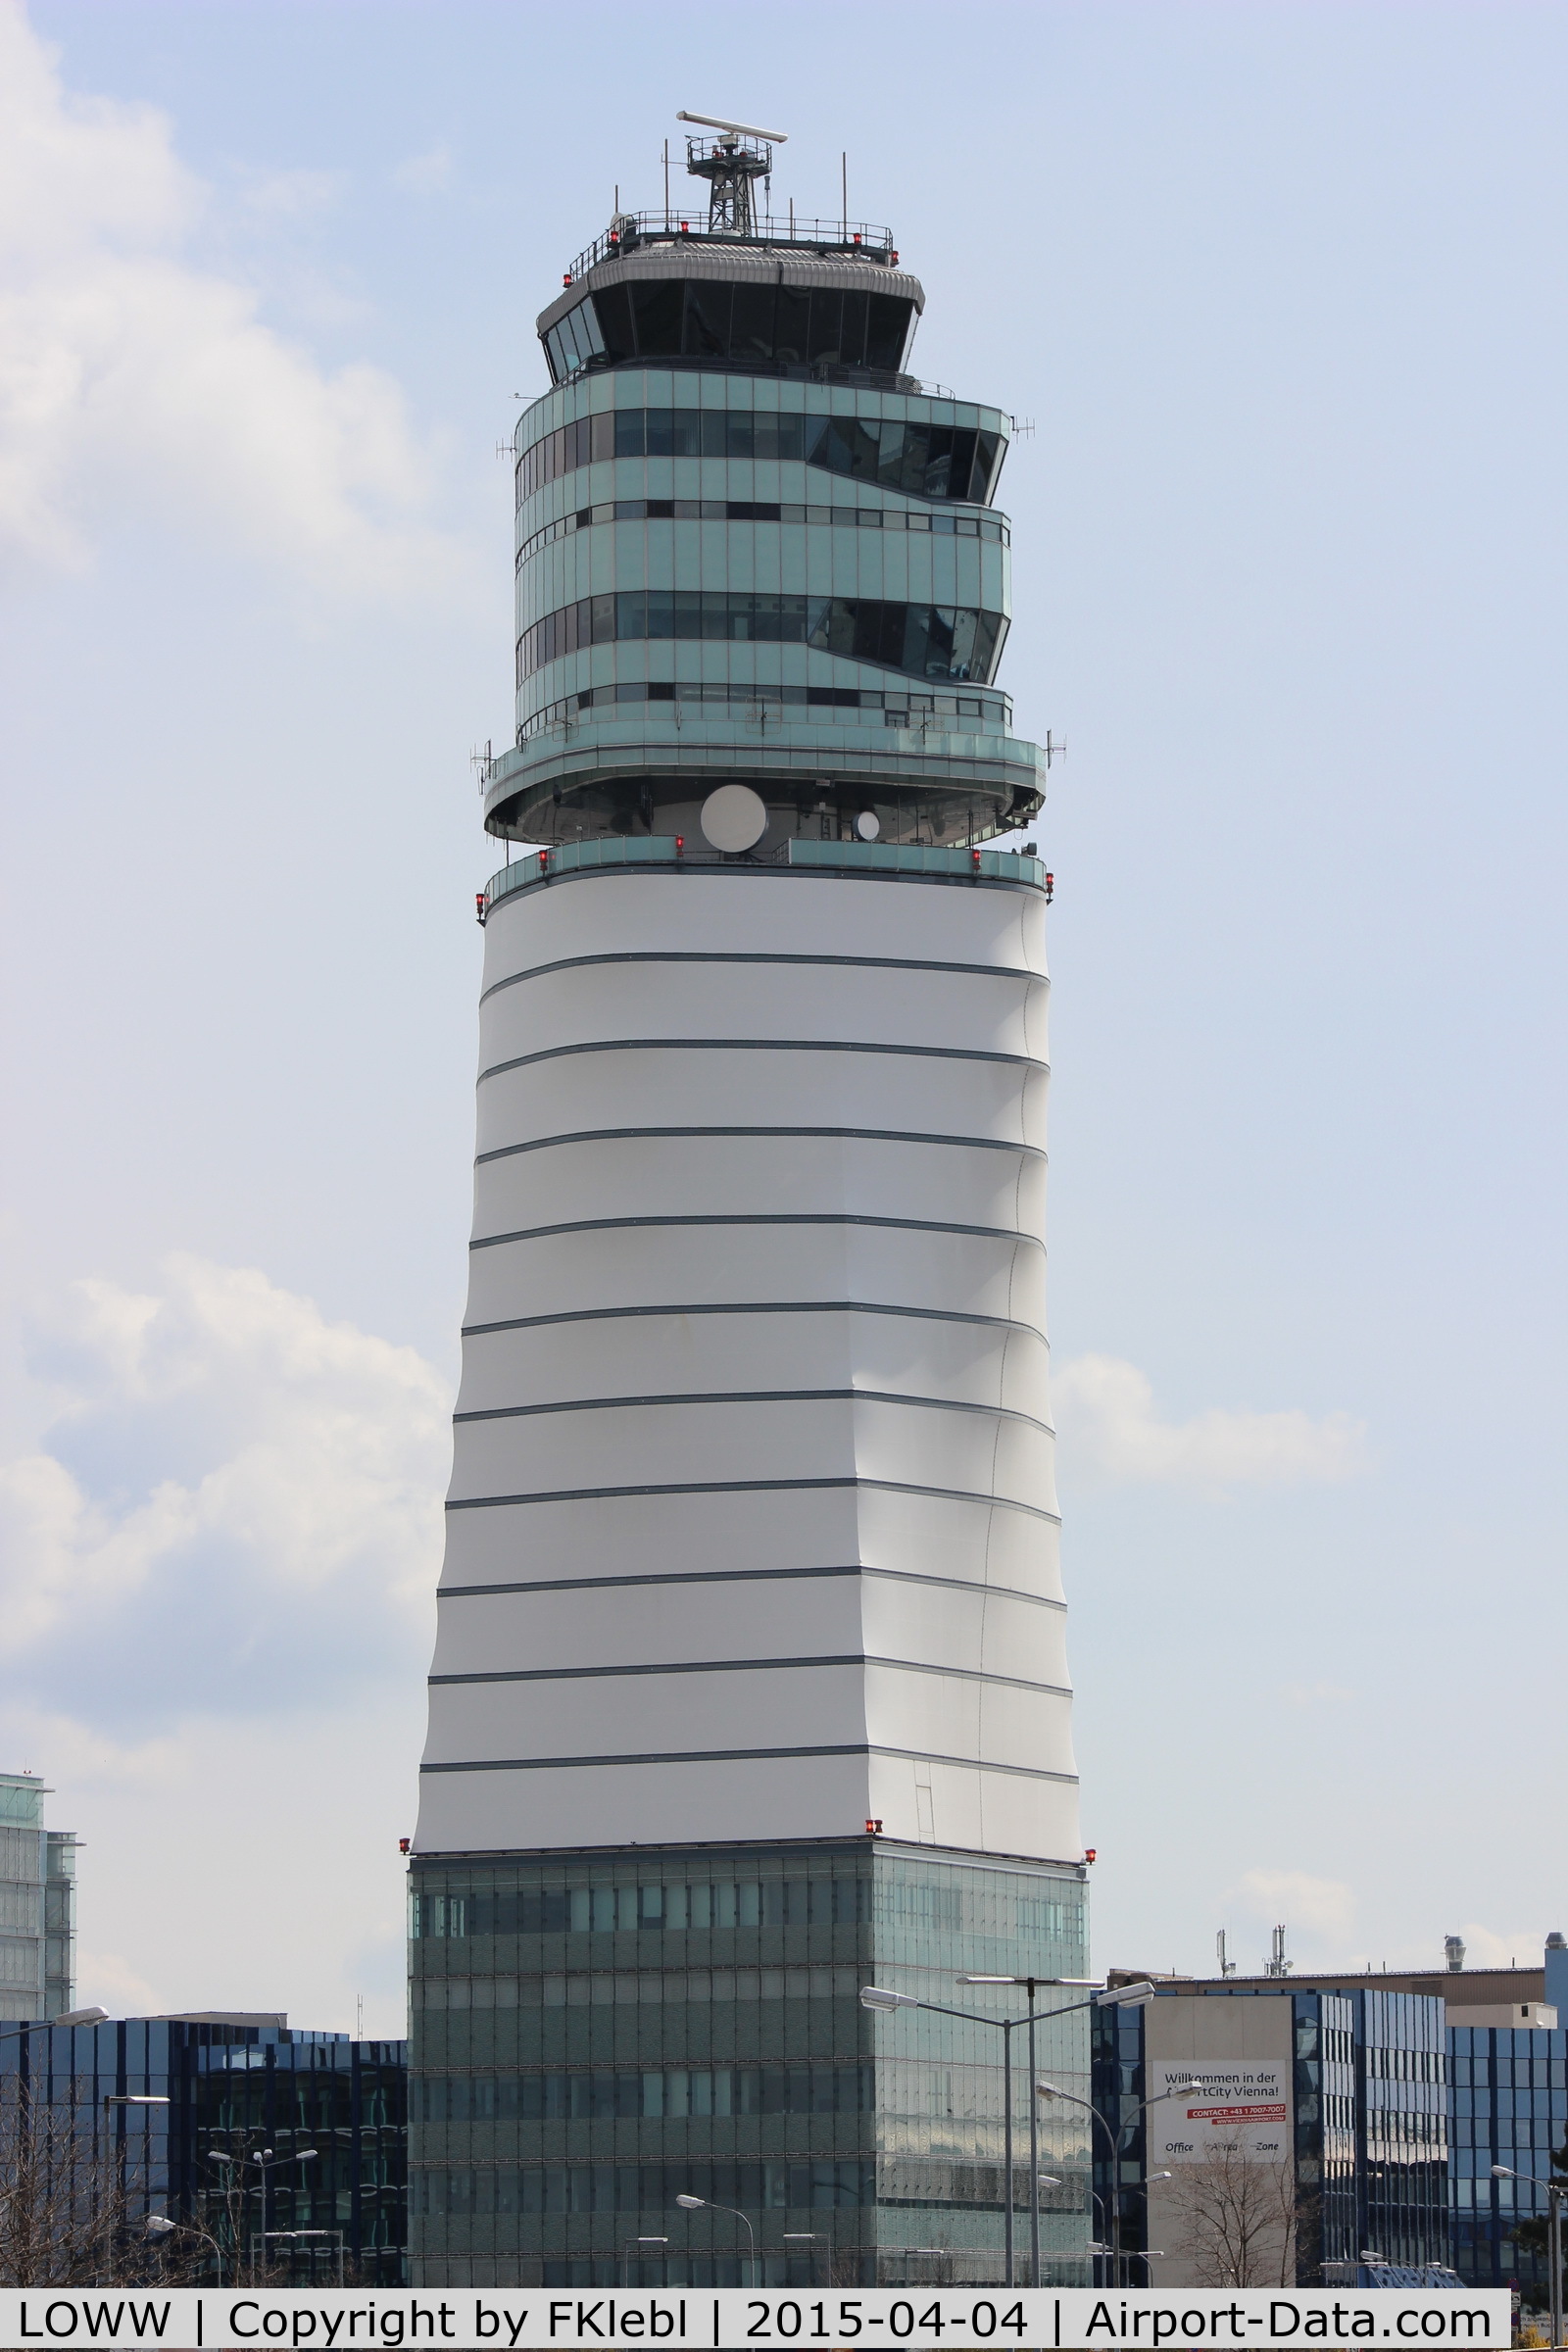 Vienna International Airport, Vienna Austria (LOWW) - Airport ICAO Code: LOWW
Airport IATA Code: VIE